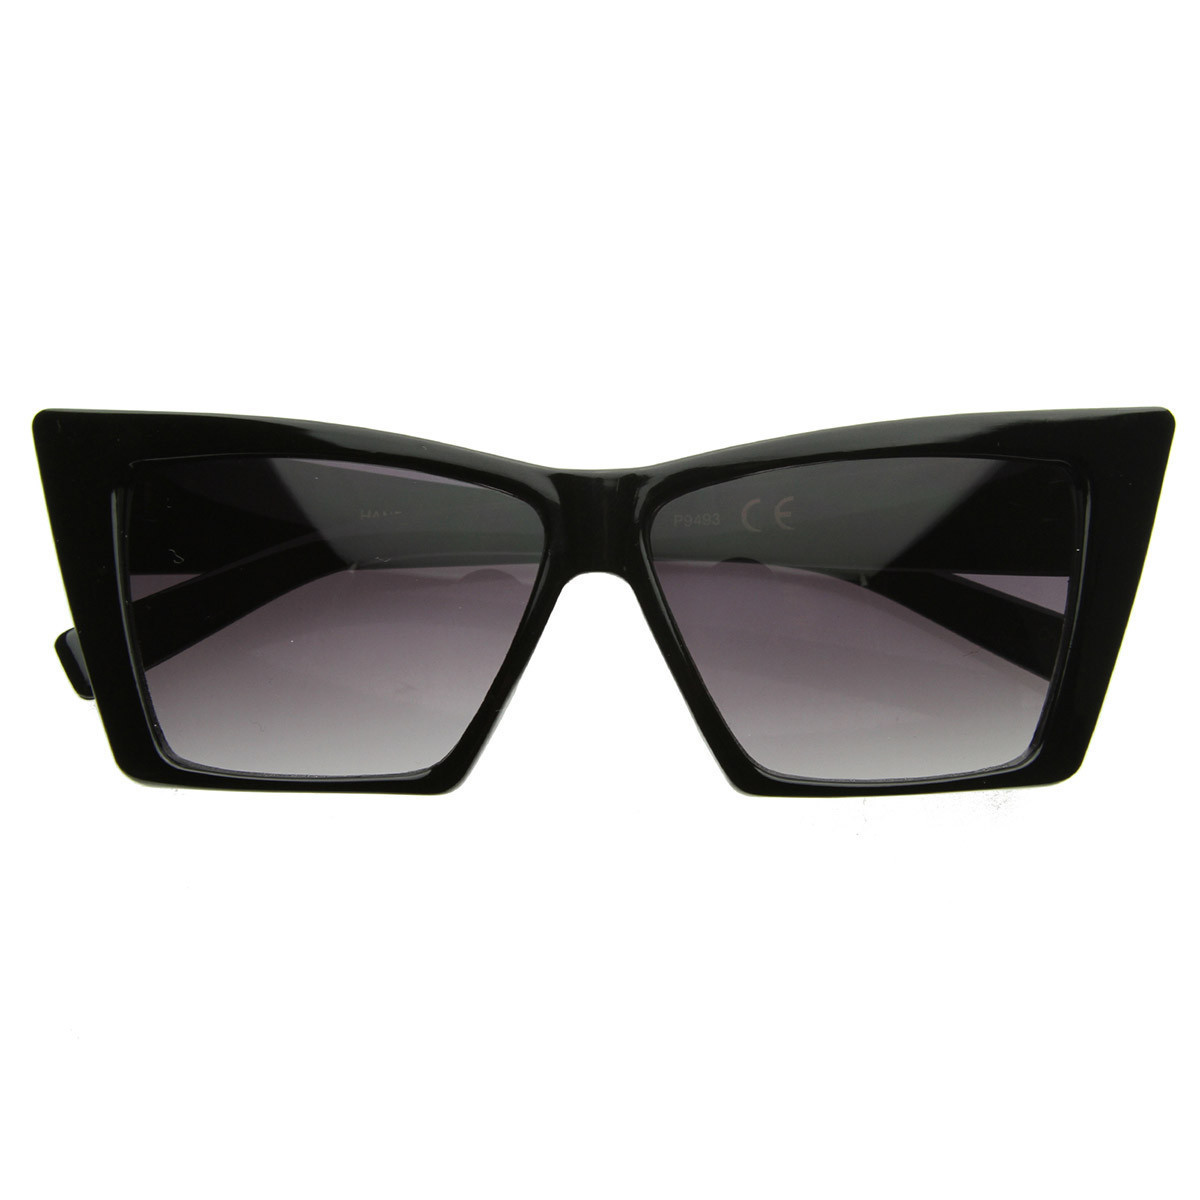 High Pointed Cat Eye Sunglasses Sharp Geometric Square Frame Cateyes - 8449 - Tortoise